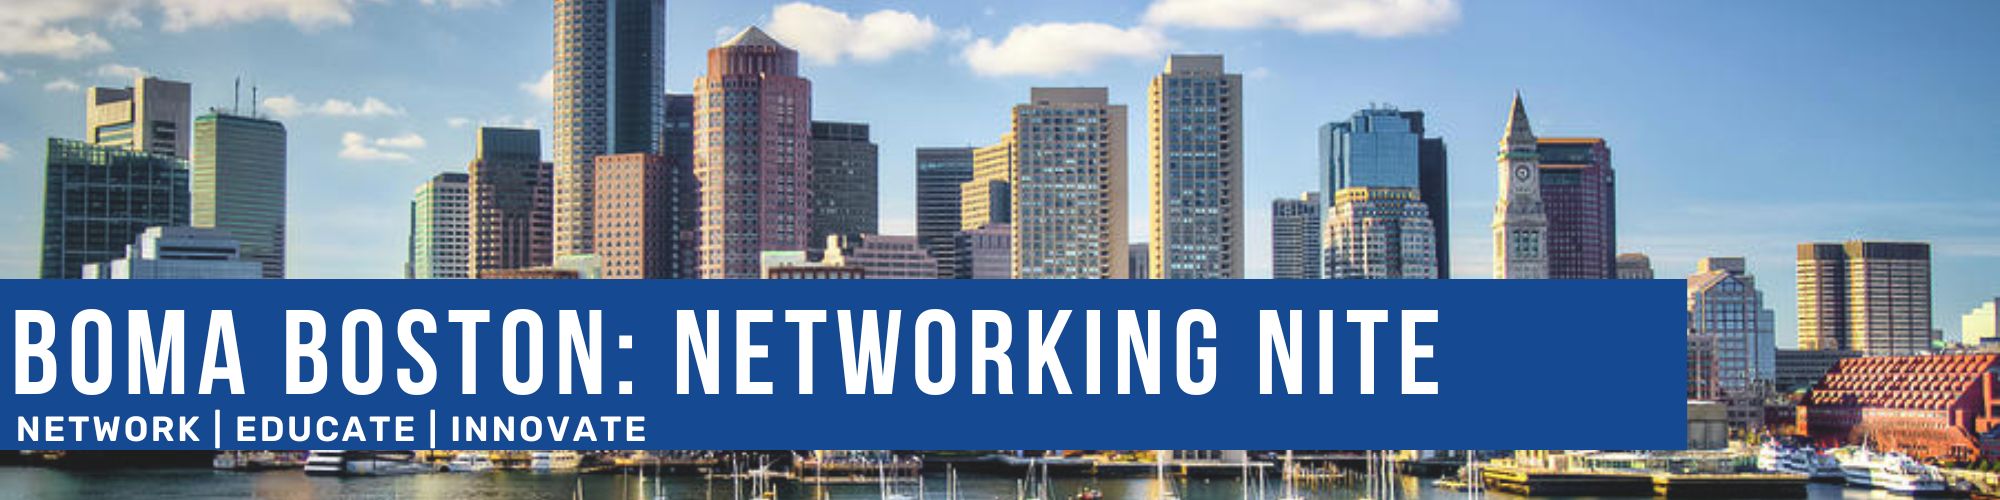 BOMA Networking Nite: Boston